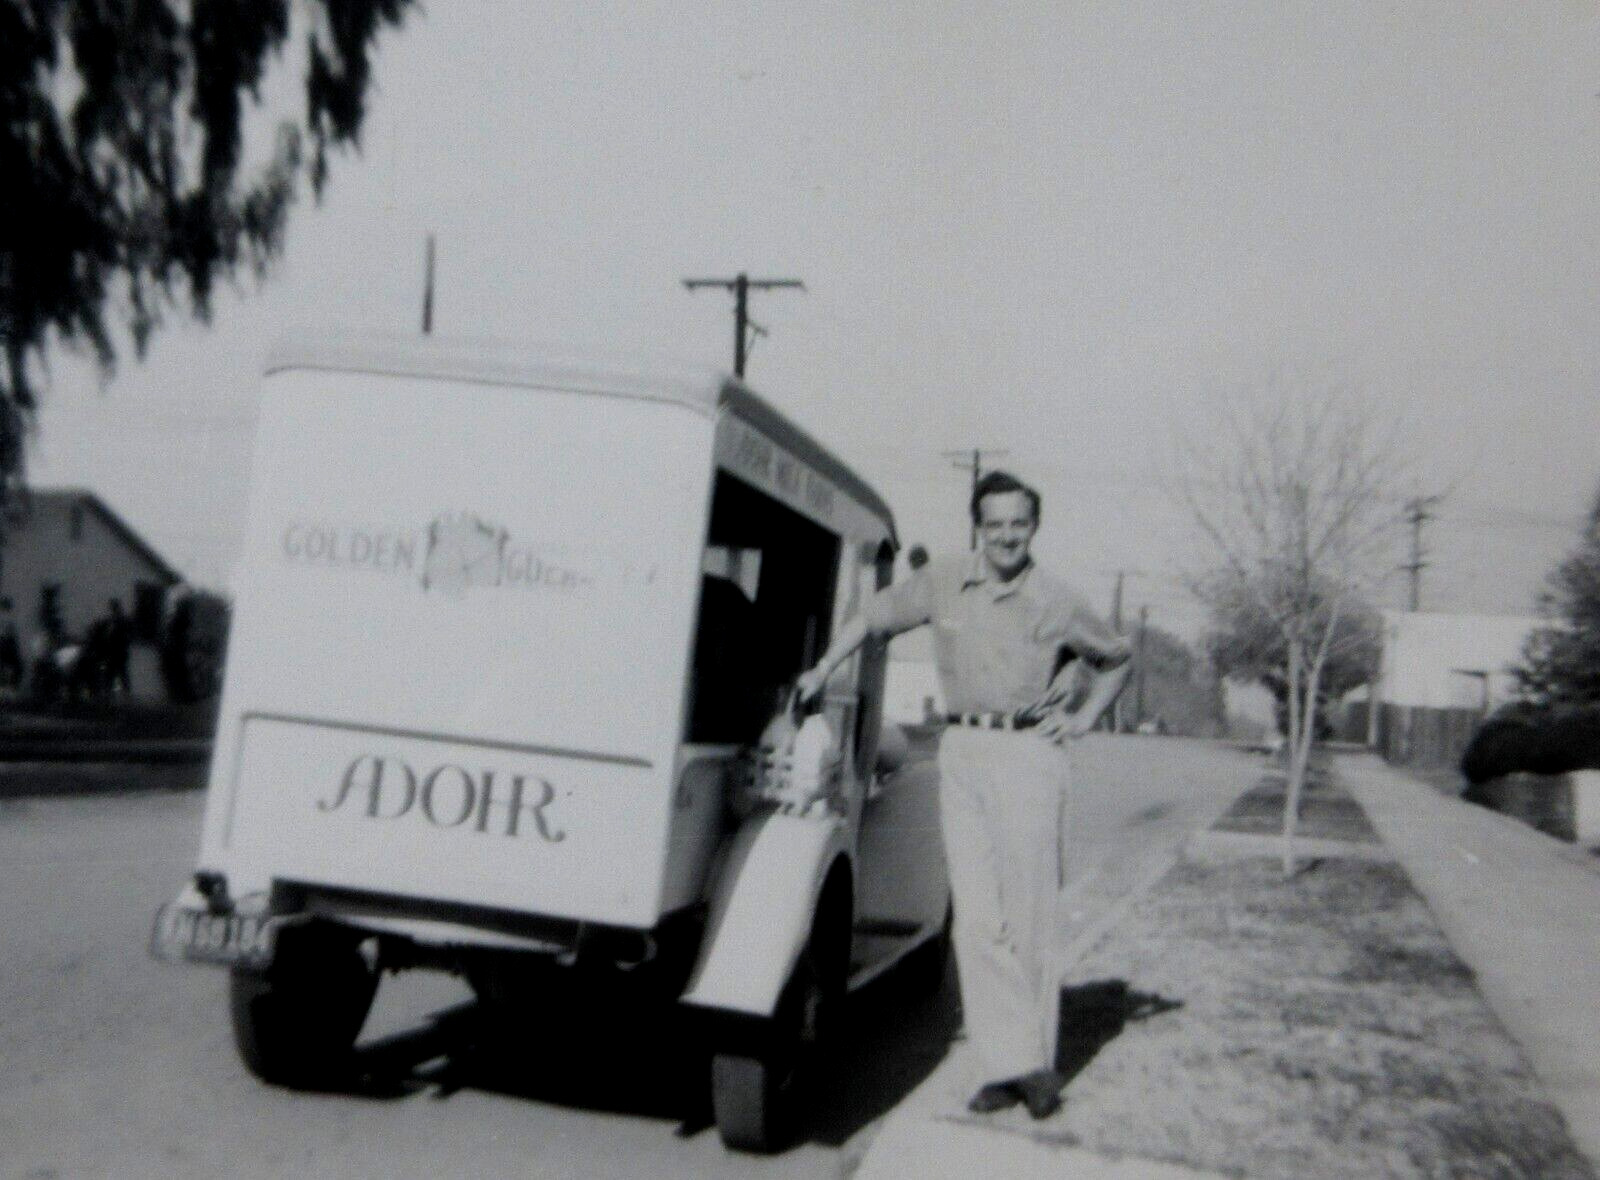 Adohr Farms Dairy Milkman Milk Truck Delivery Photo Bottles Los Angeles CA 1951